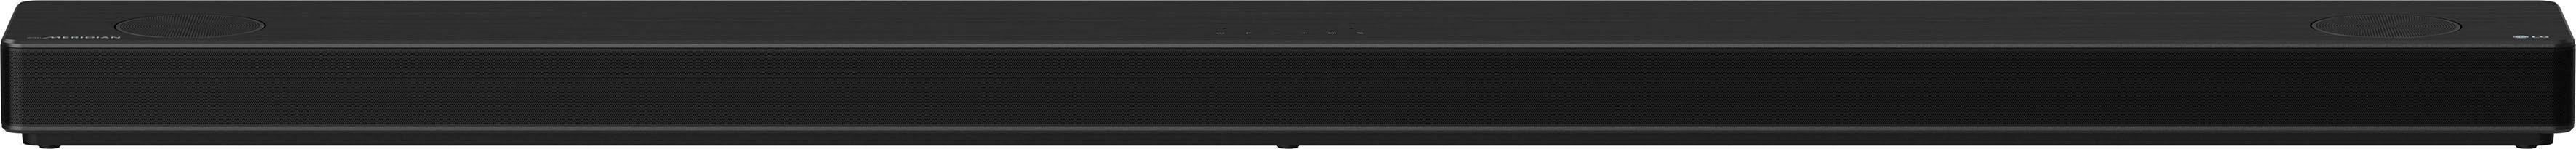 LG DSP11RA Soundbar 7.1.4 WLAN, W) (Bluetooth, 770